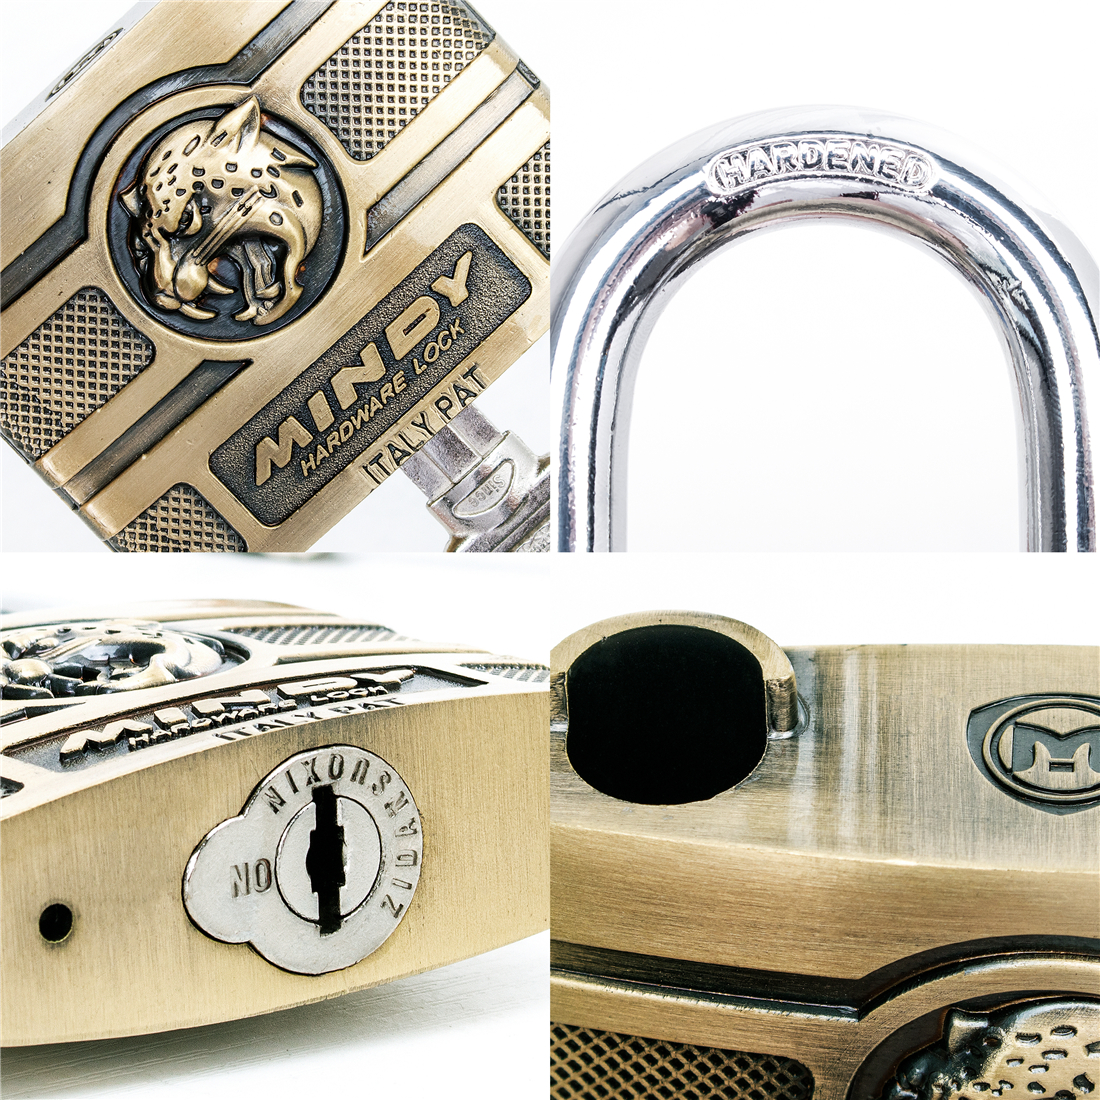 APL 60mm Hardened Keyed Hardware Padlock with 4 Special Keys for School Gym Locker, Sports Locker, Fence, Toolbox, Gate, Case